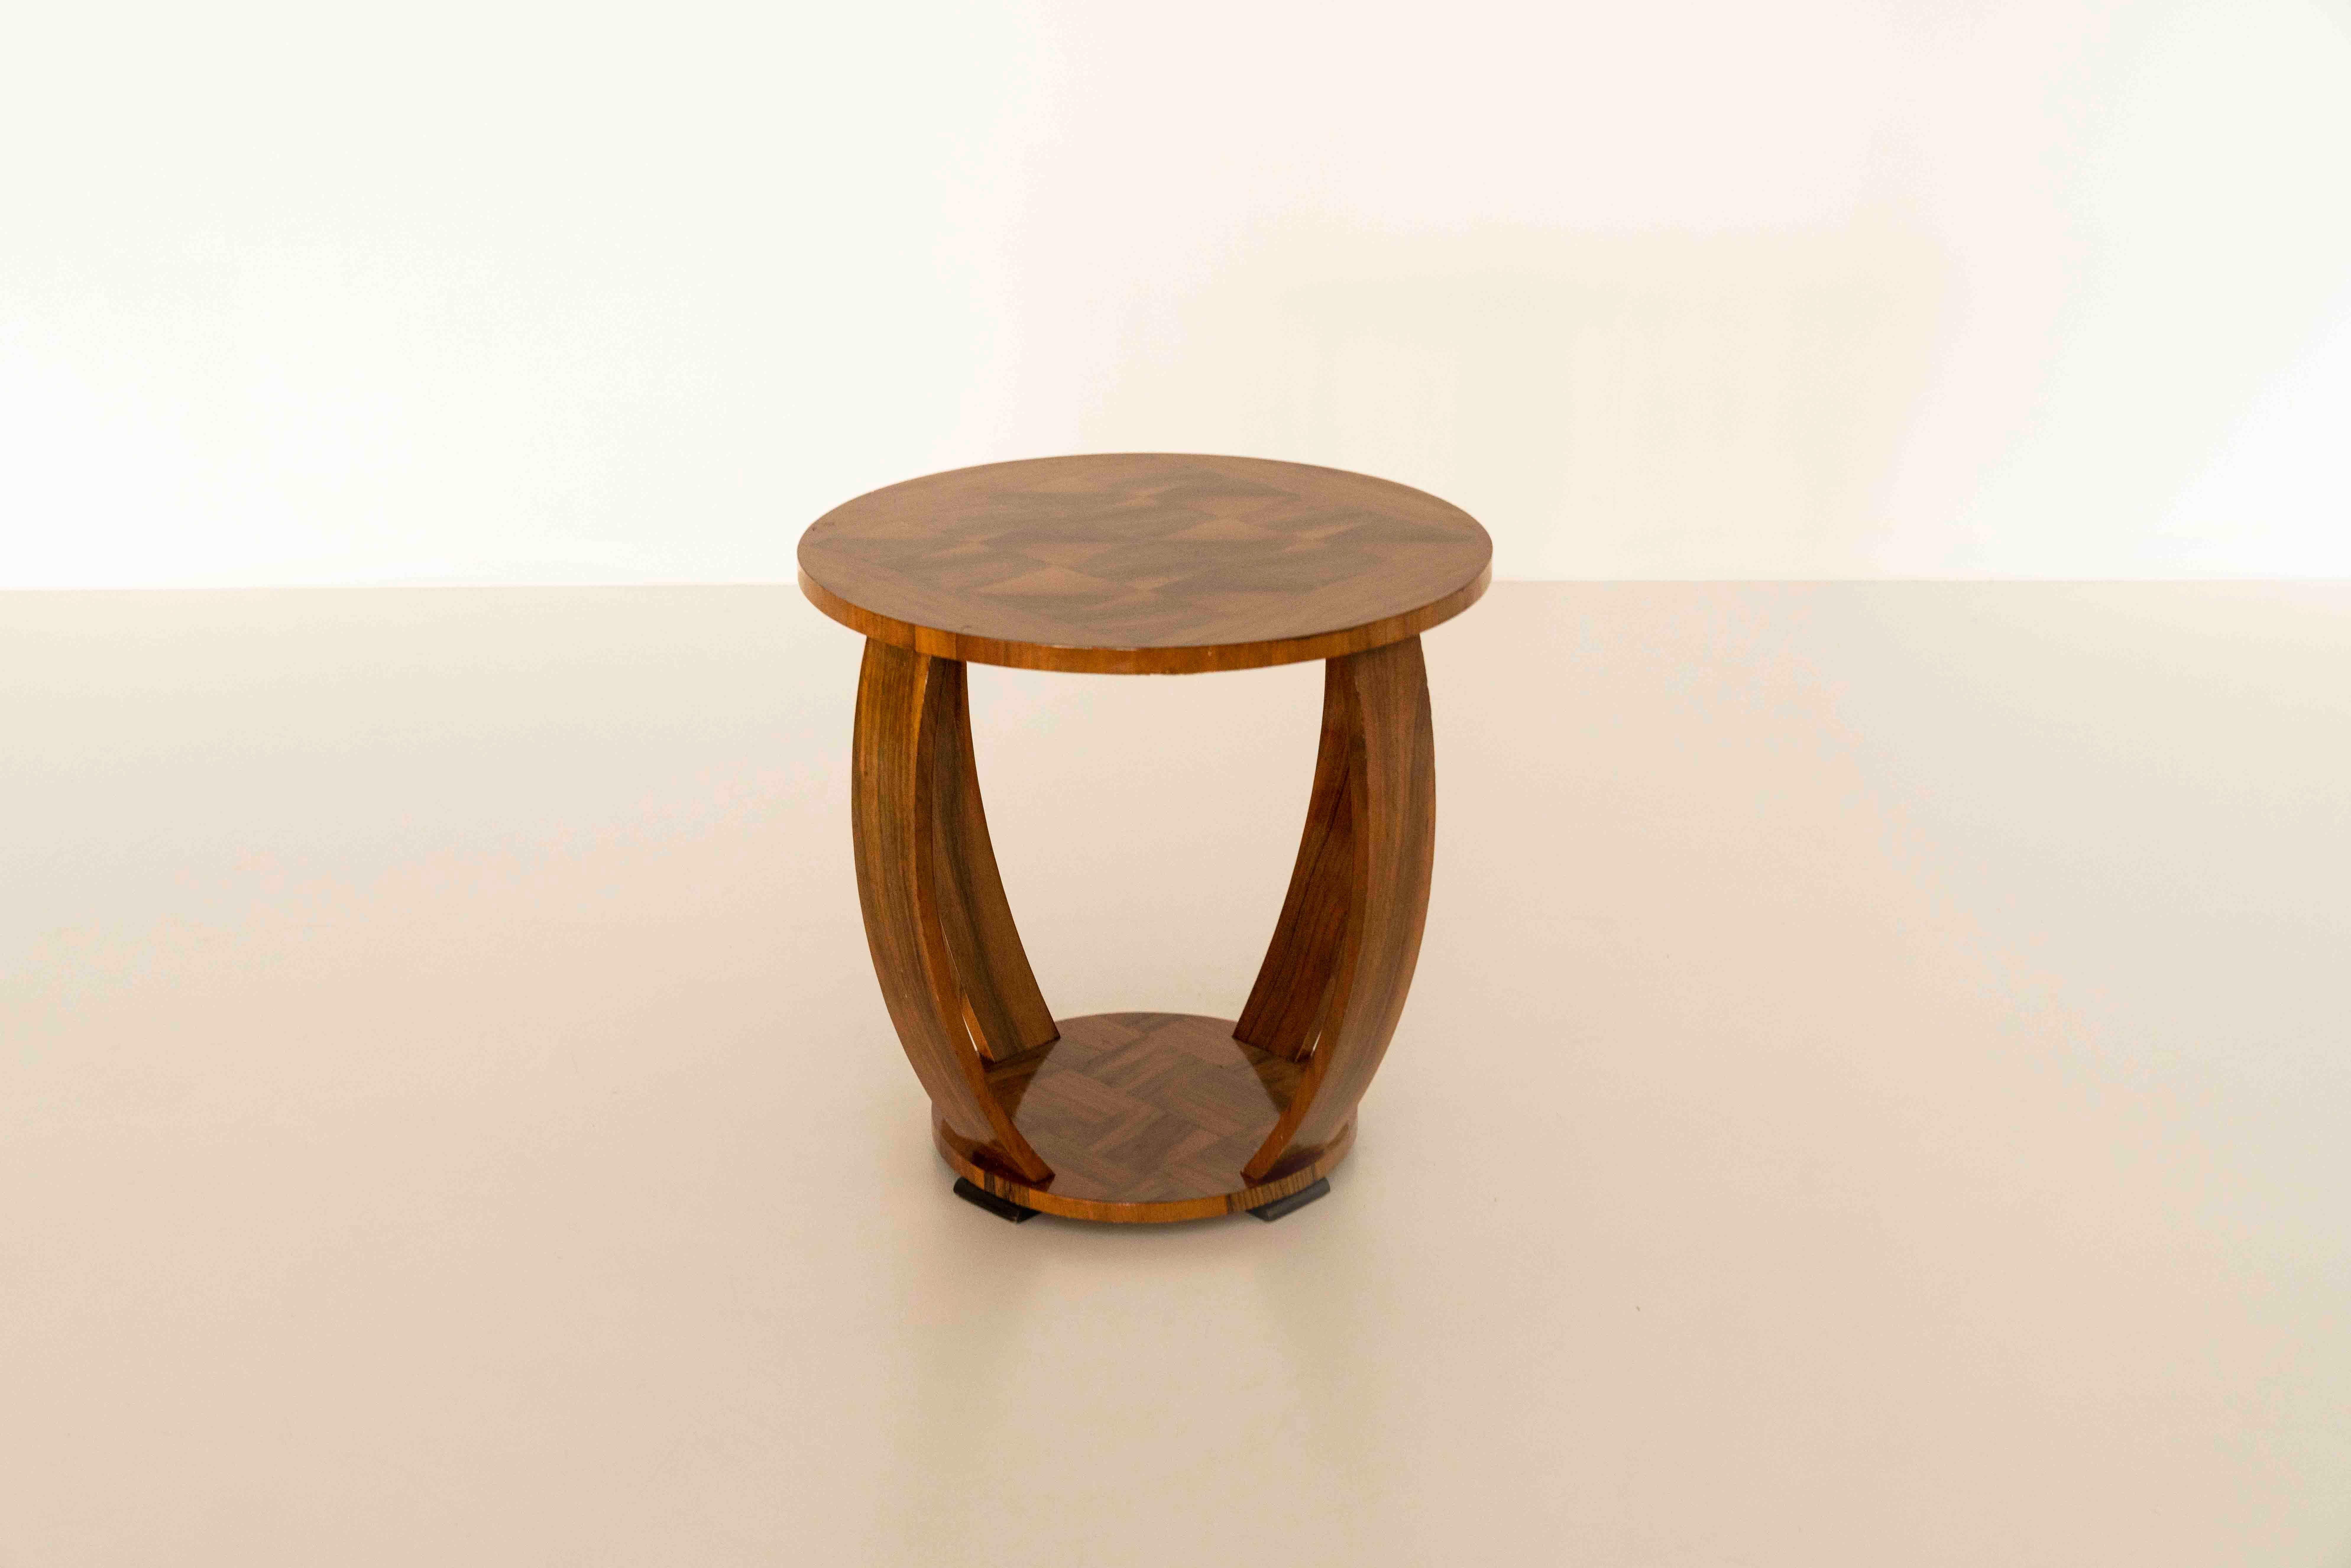 European Round Art Deco Coffee Table with Chesspiece Motiv on Top